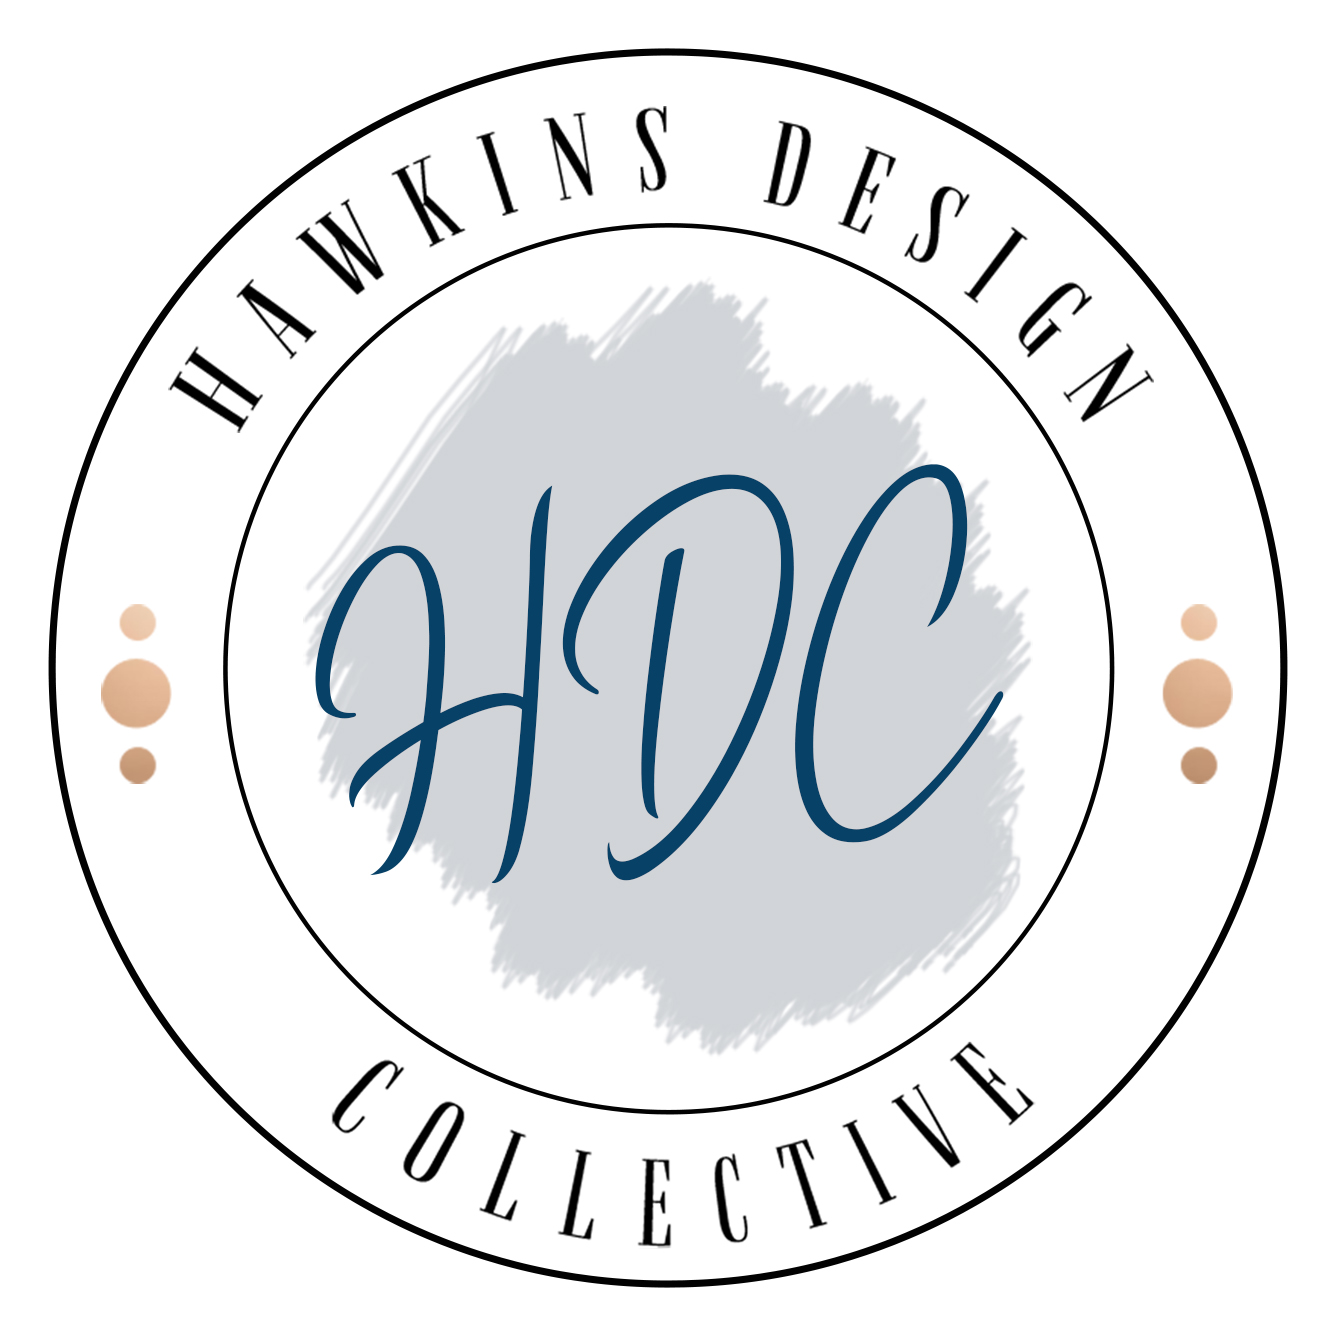 Hawkins Design Collective